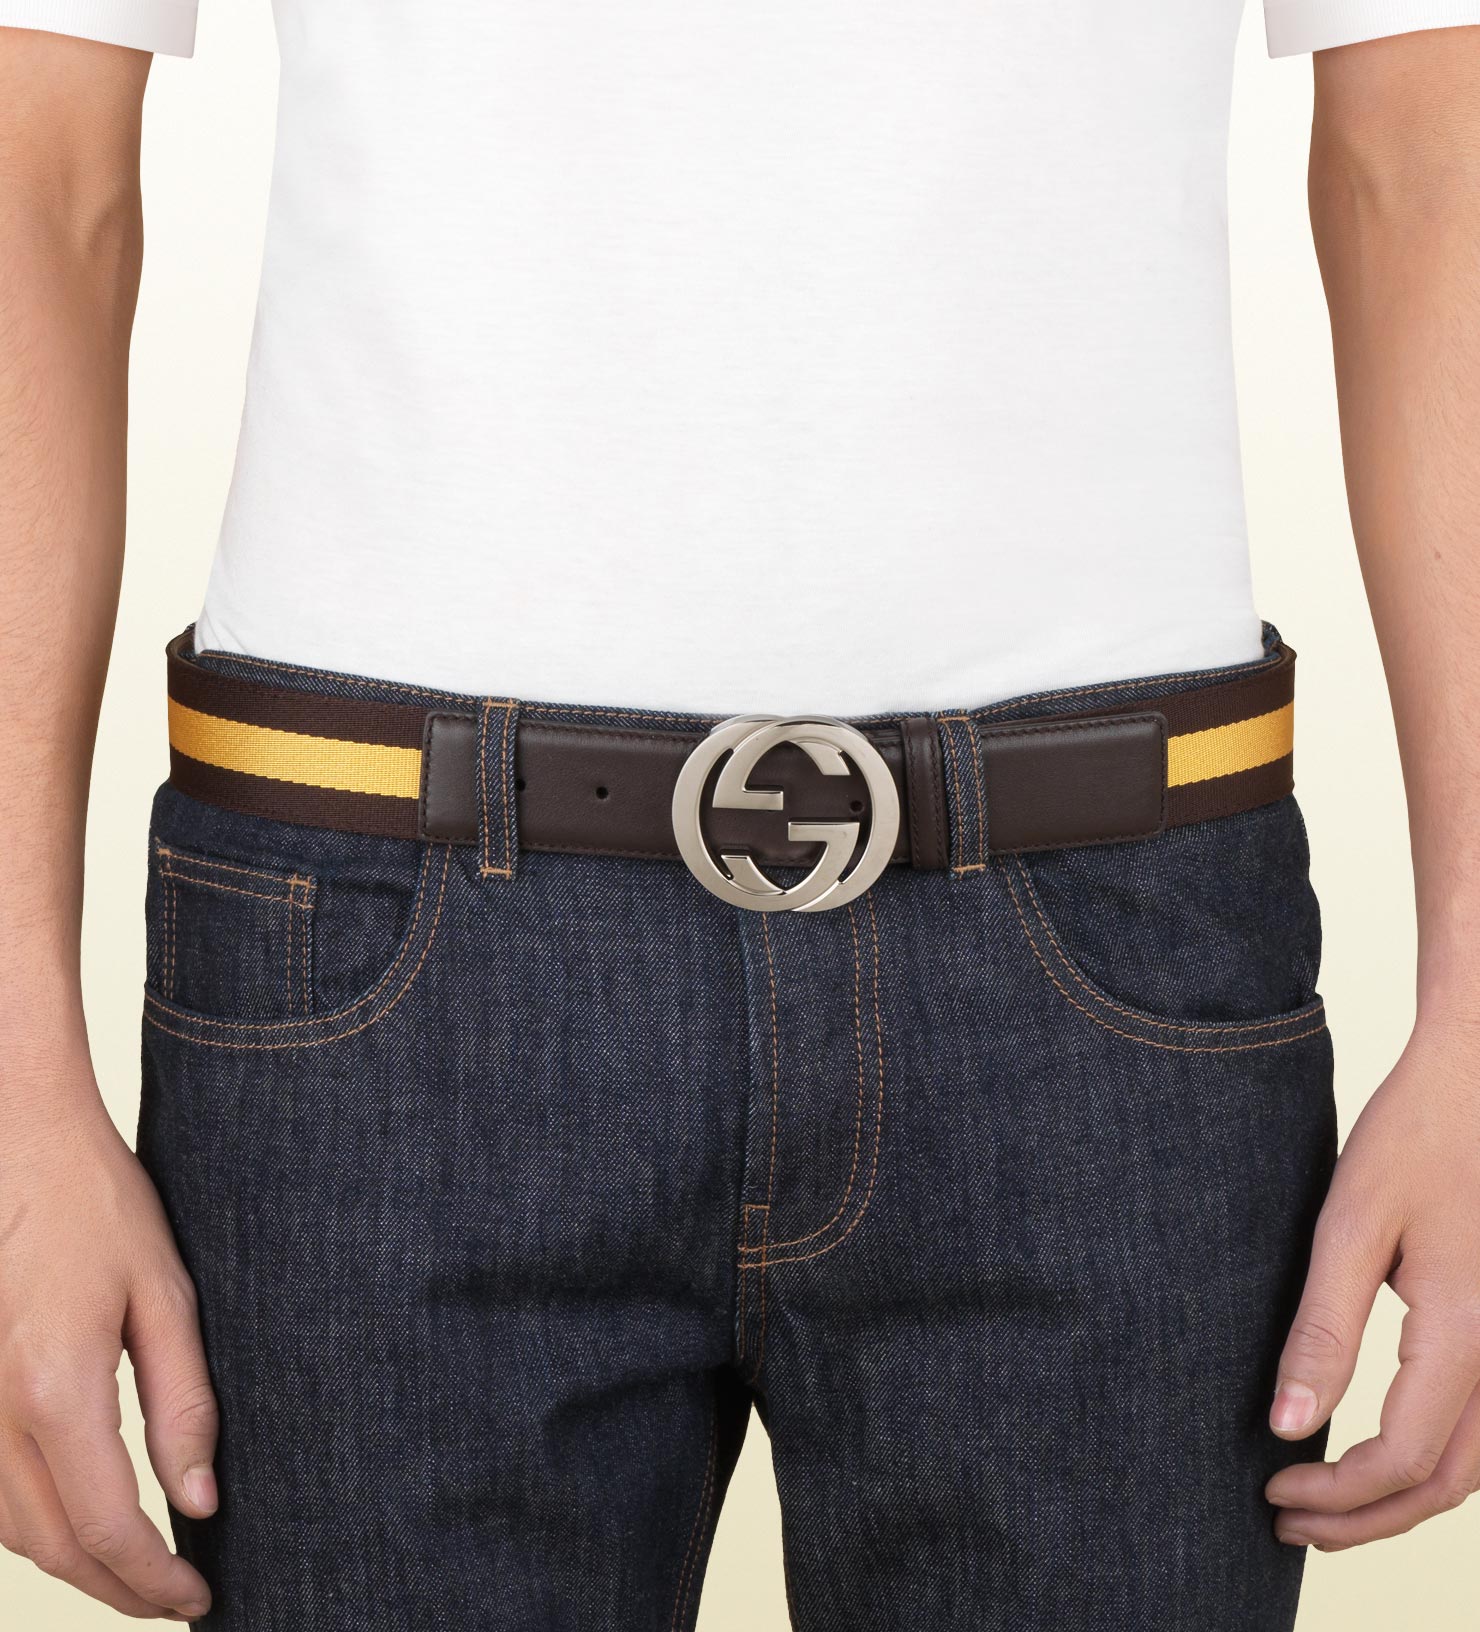 Lyst - Gucci Belt with Interlocking G Buckle in Brown for Men